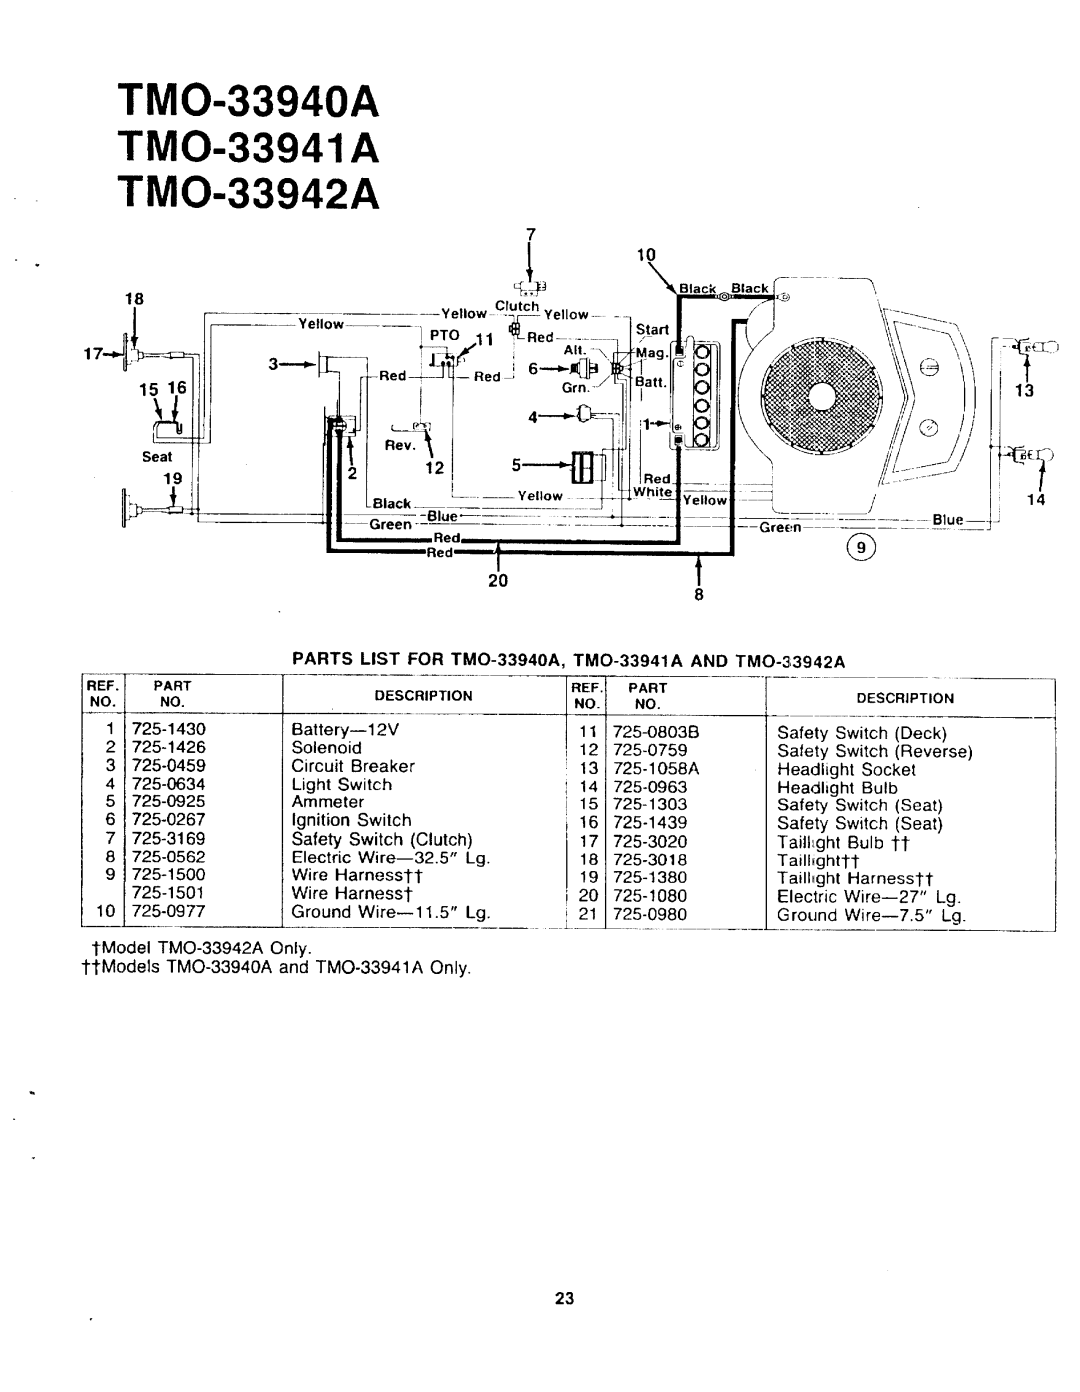 Montgomery Ward TMO-33942A, TMO-33941A, TMO-33940A manual 